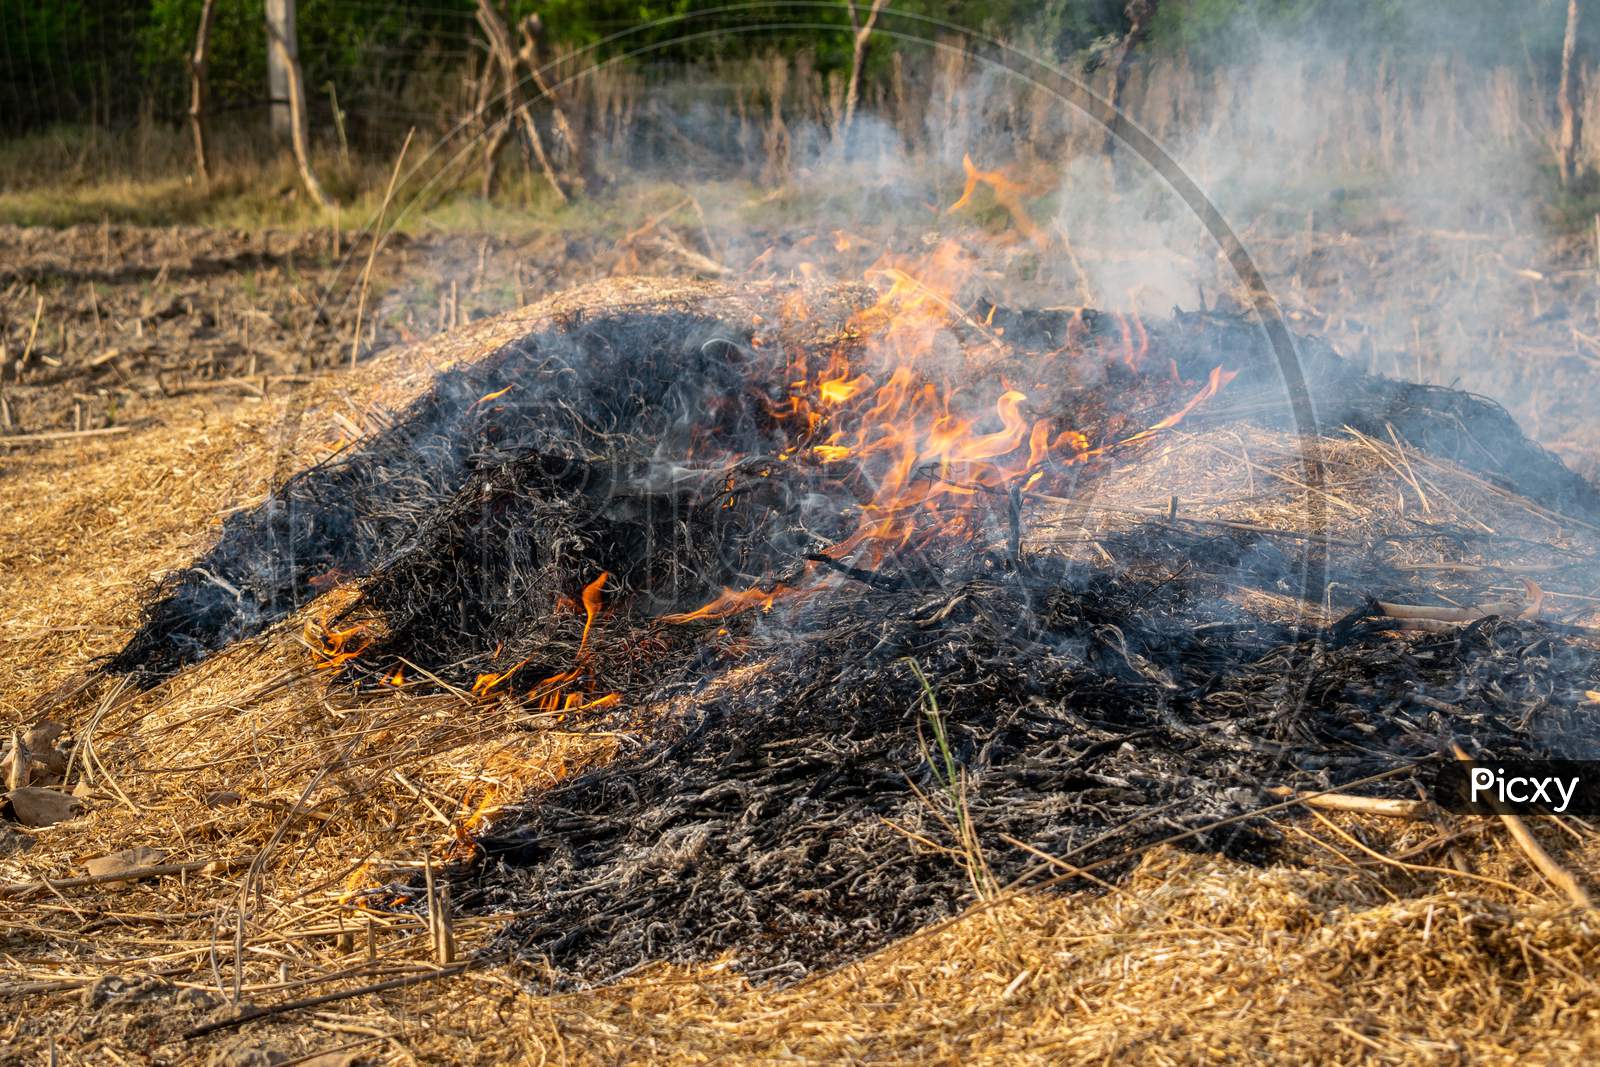 Farm debris being burnt in a village after crop harvesting